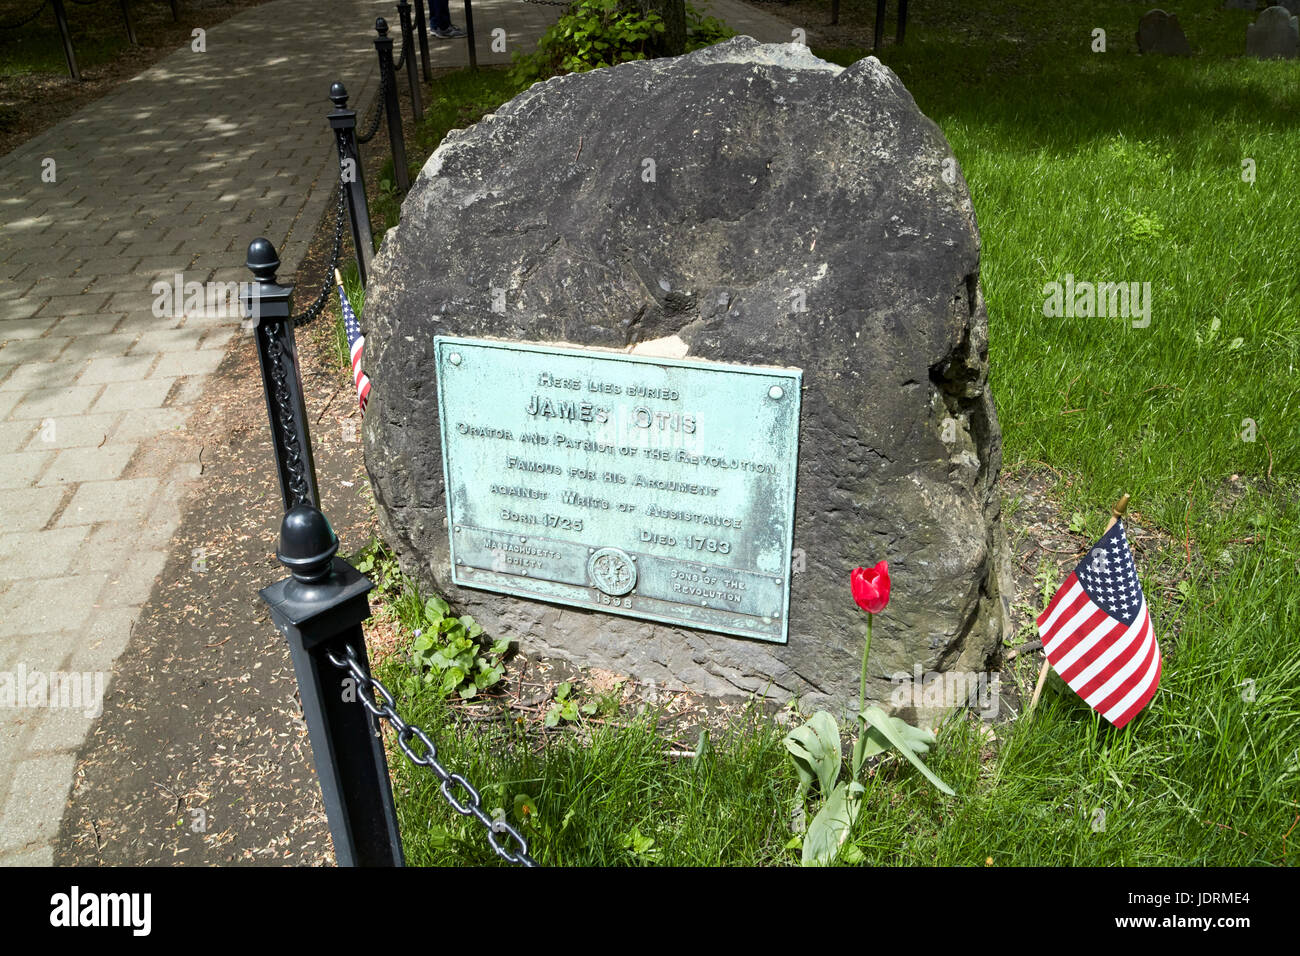 grave of revolutionary war patriot james otis Granary Burying ground Boston USA Stock Photo